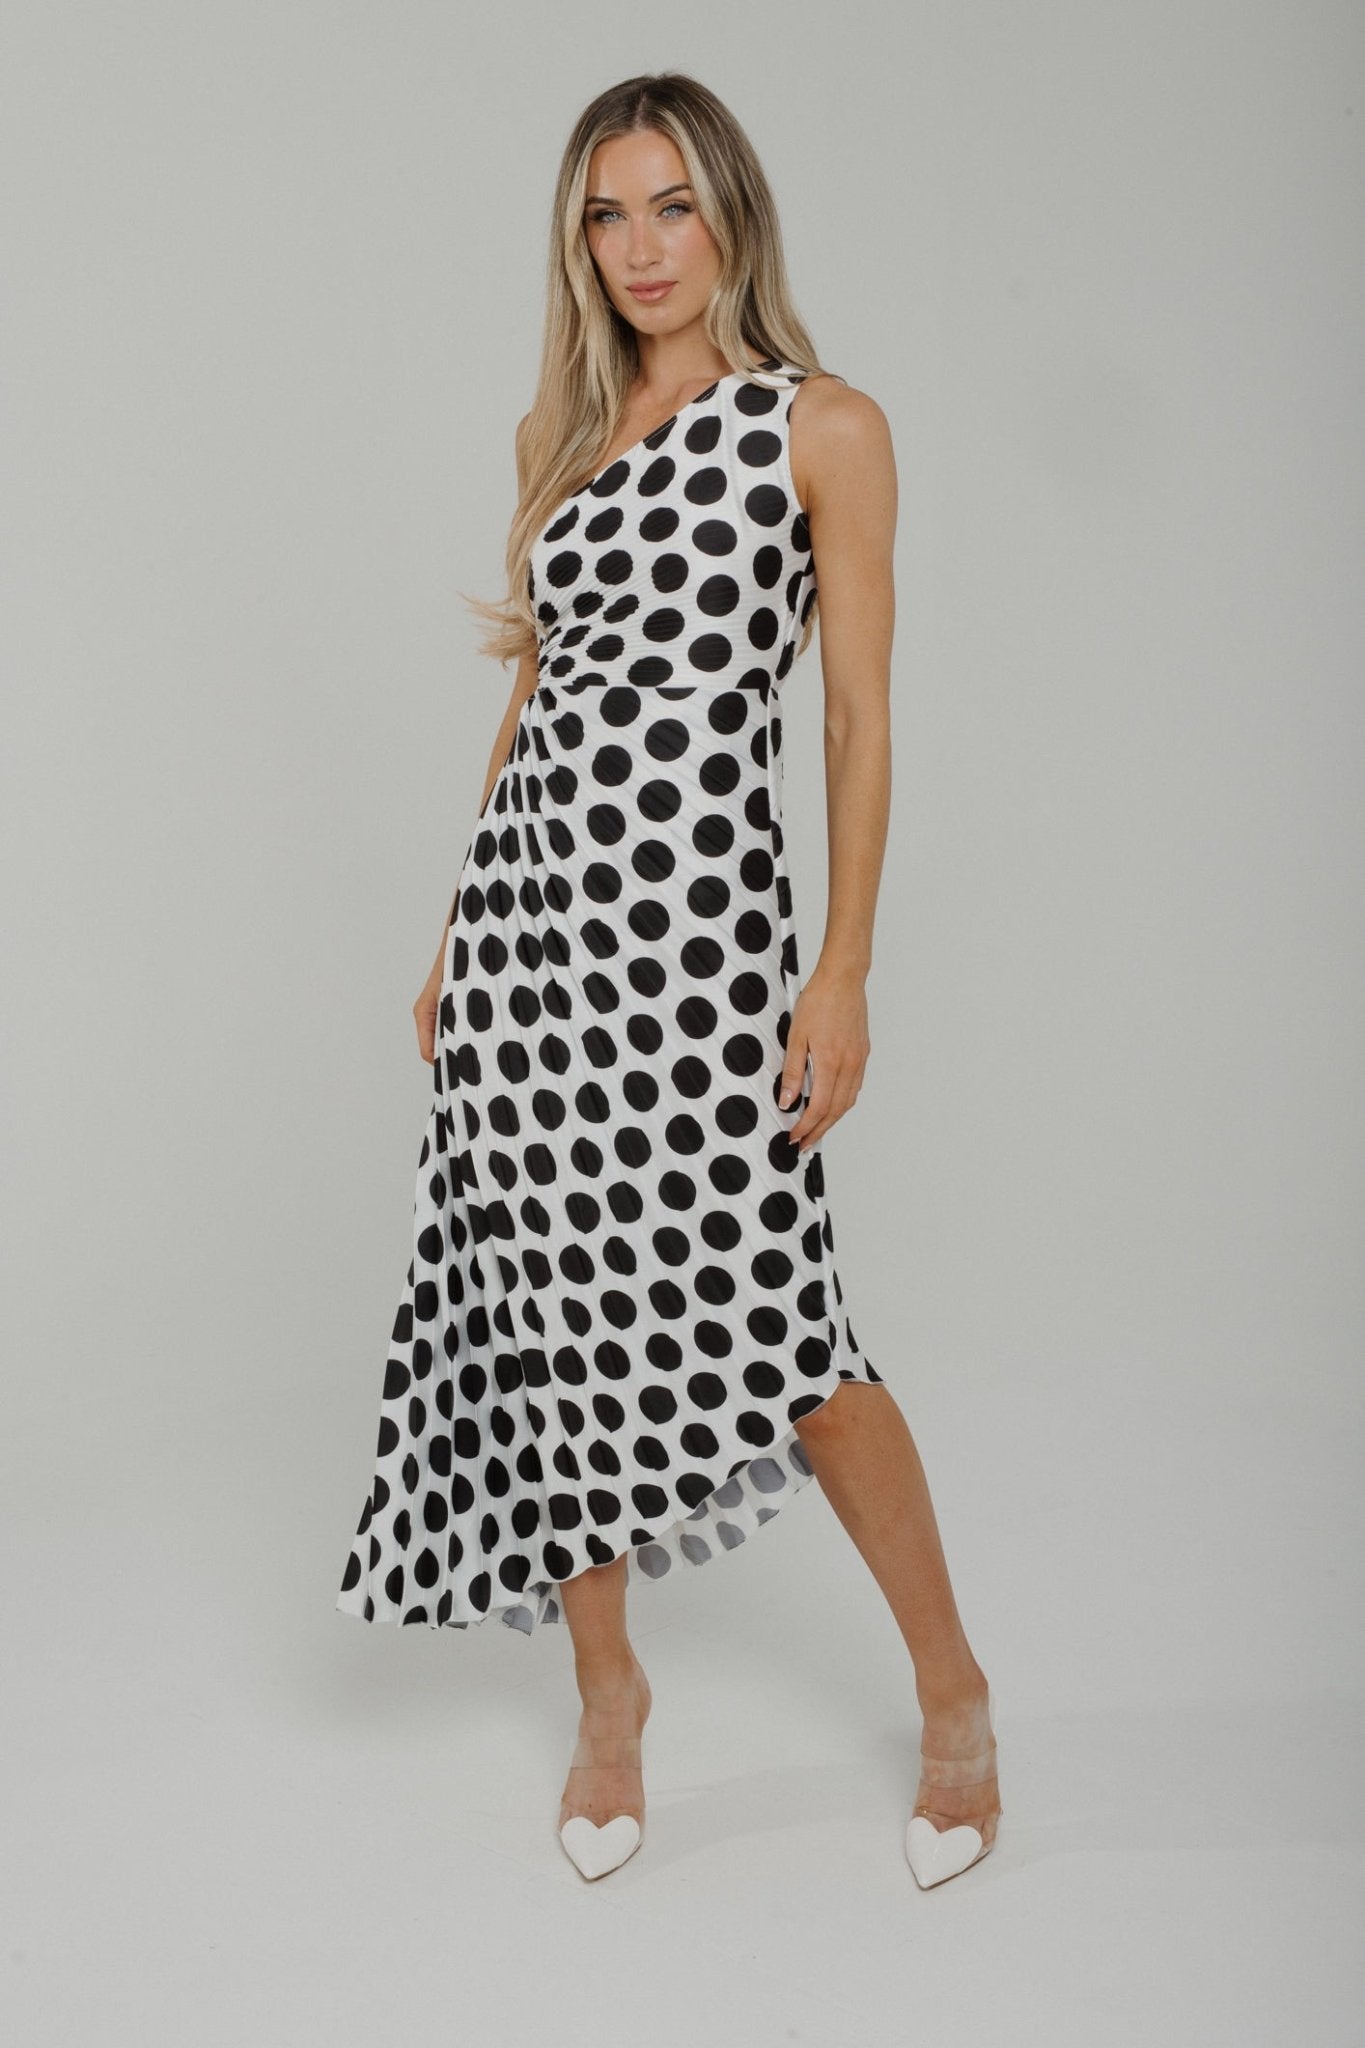 Indie One Shoulder Polka Dot Maxi Dress In Monochrome - The Walk in Wardrobe